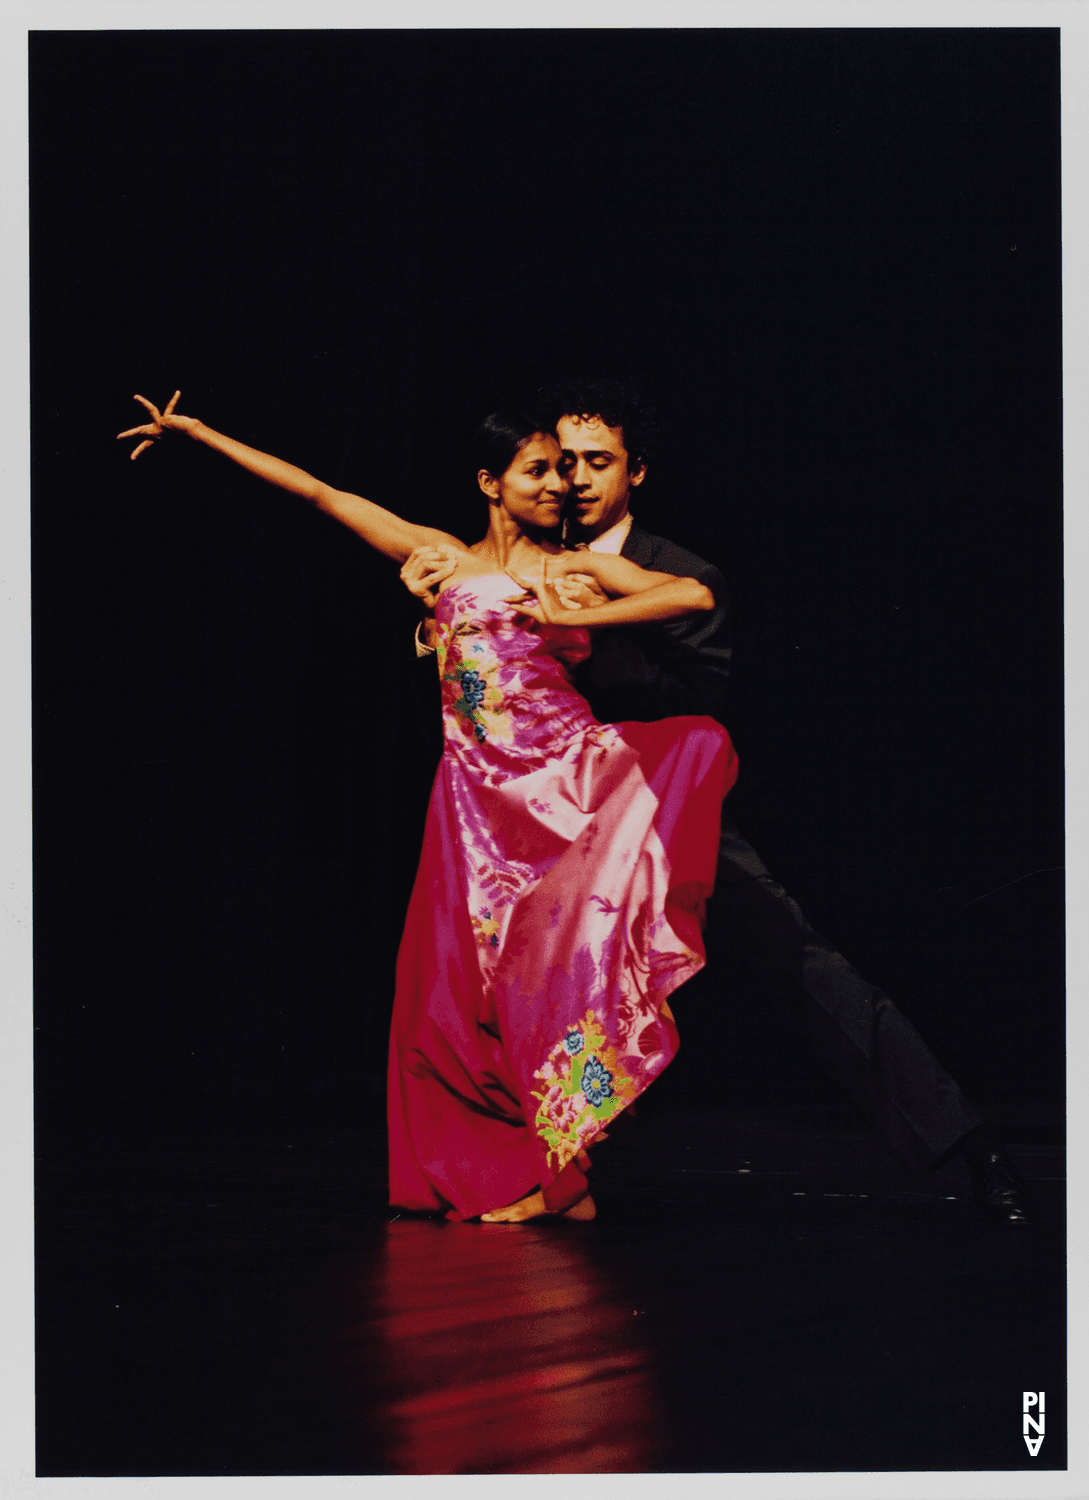 Jorge Puerta Armenta and Shantala Shivalingappa in “Nefés” by Pina Bausch, March 21, 2003